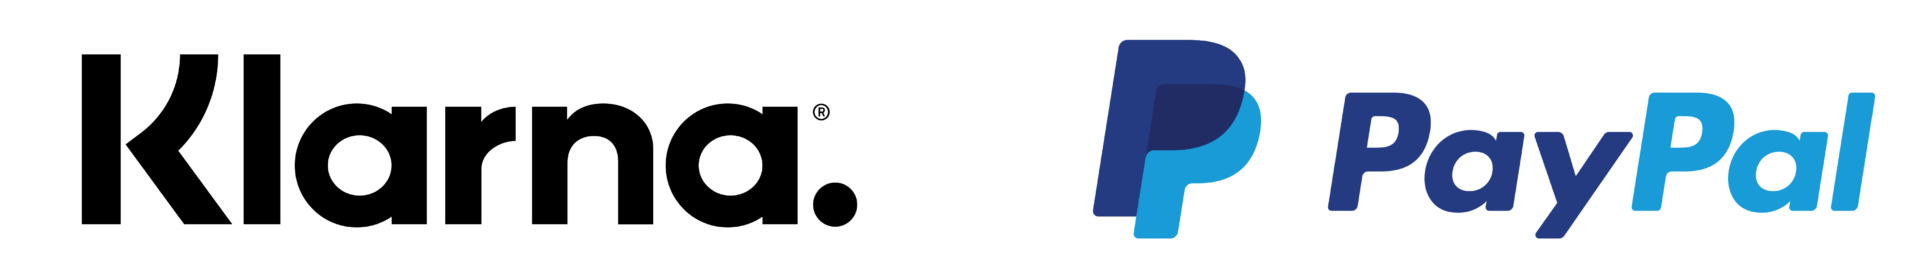 Logo of Klarna and Paypal shown horizontally